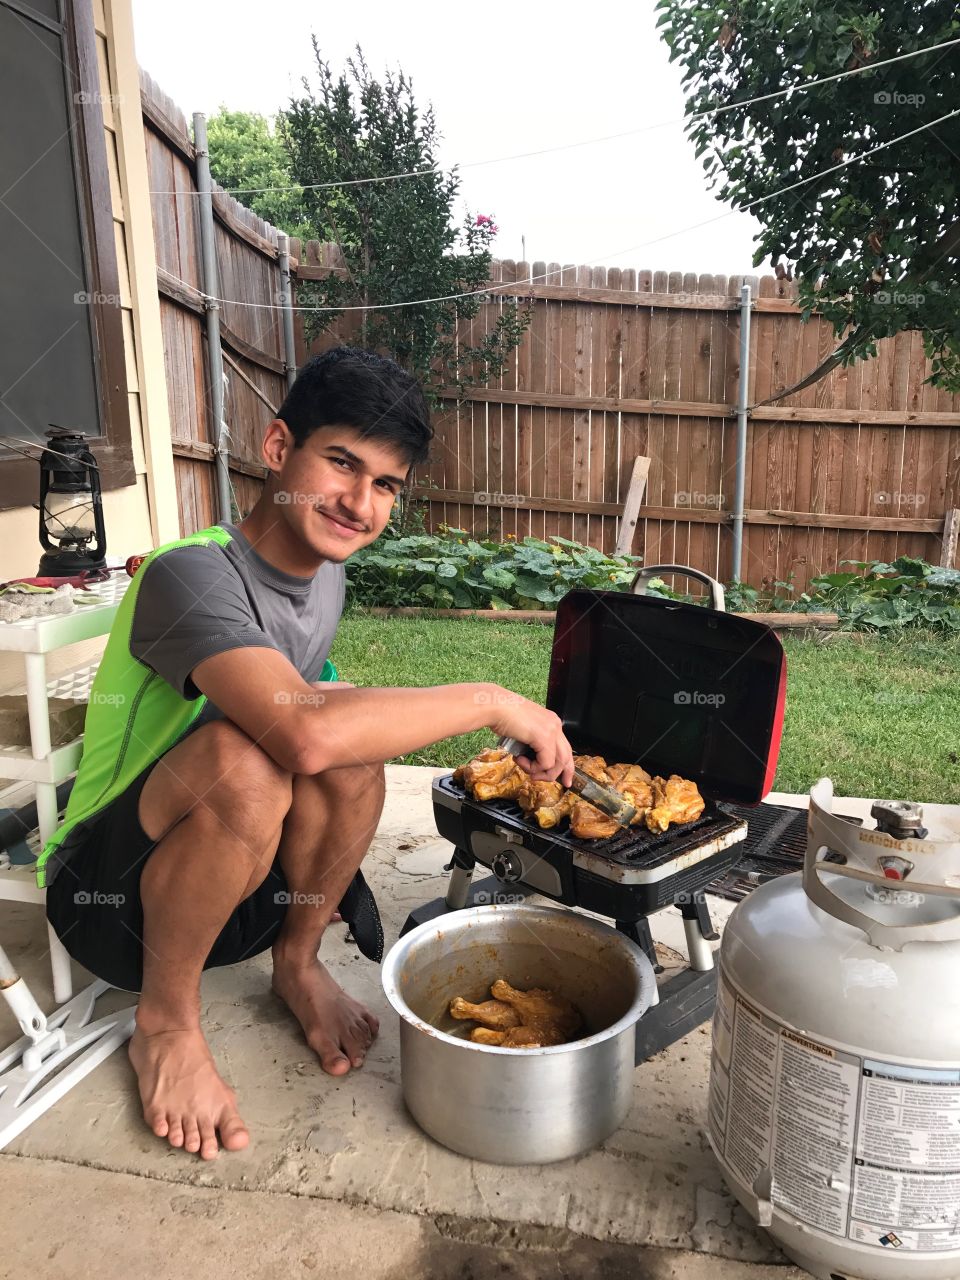 A gay baking barbecue 